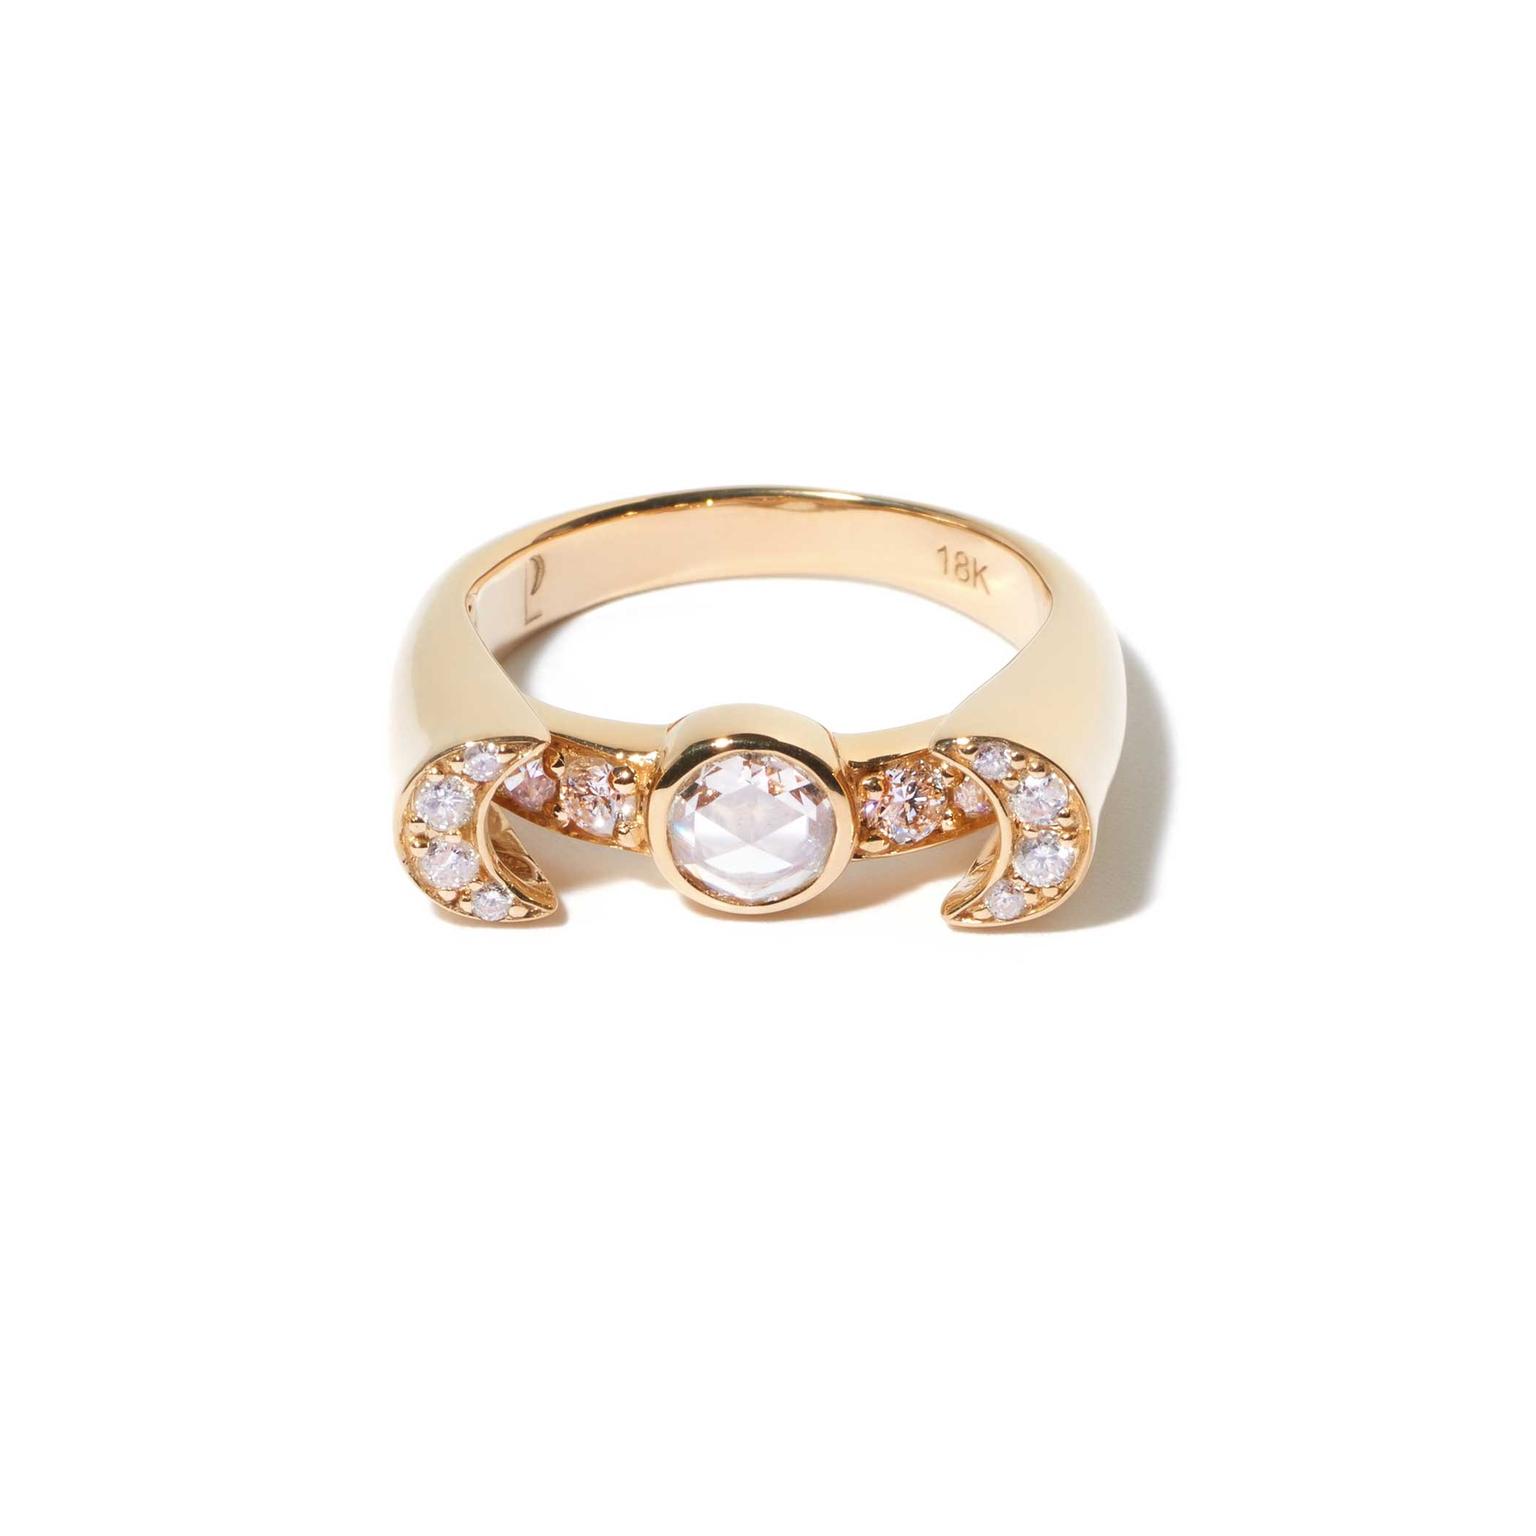 Pamela Love rose-cut diamond ring